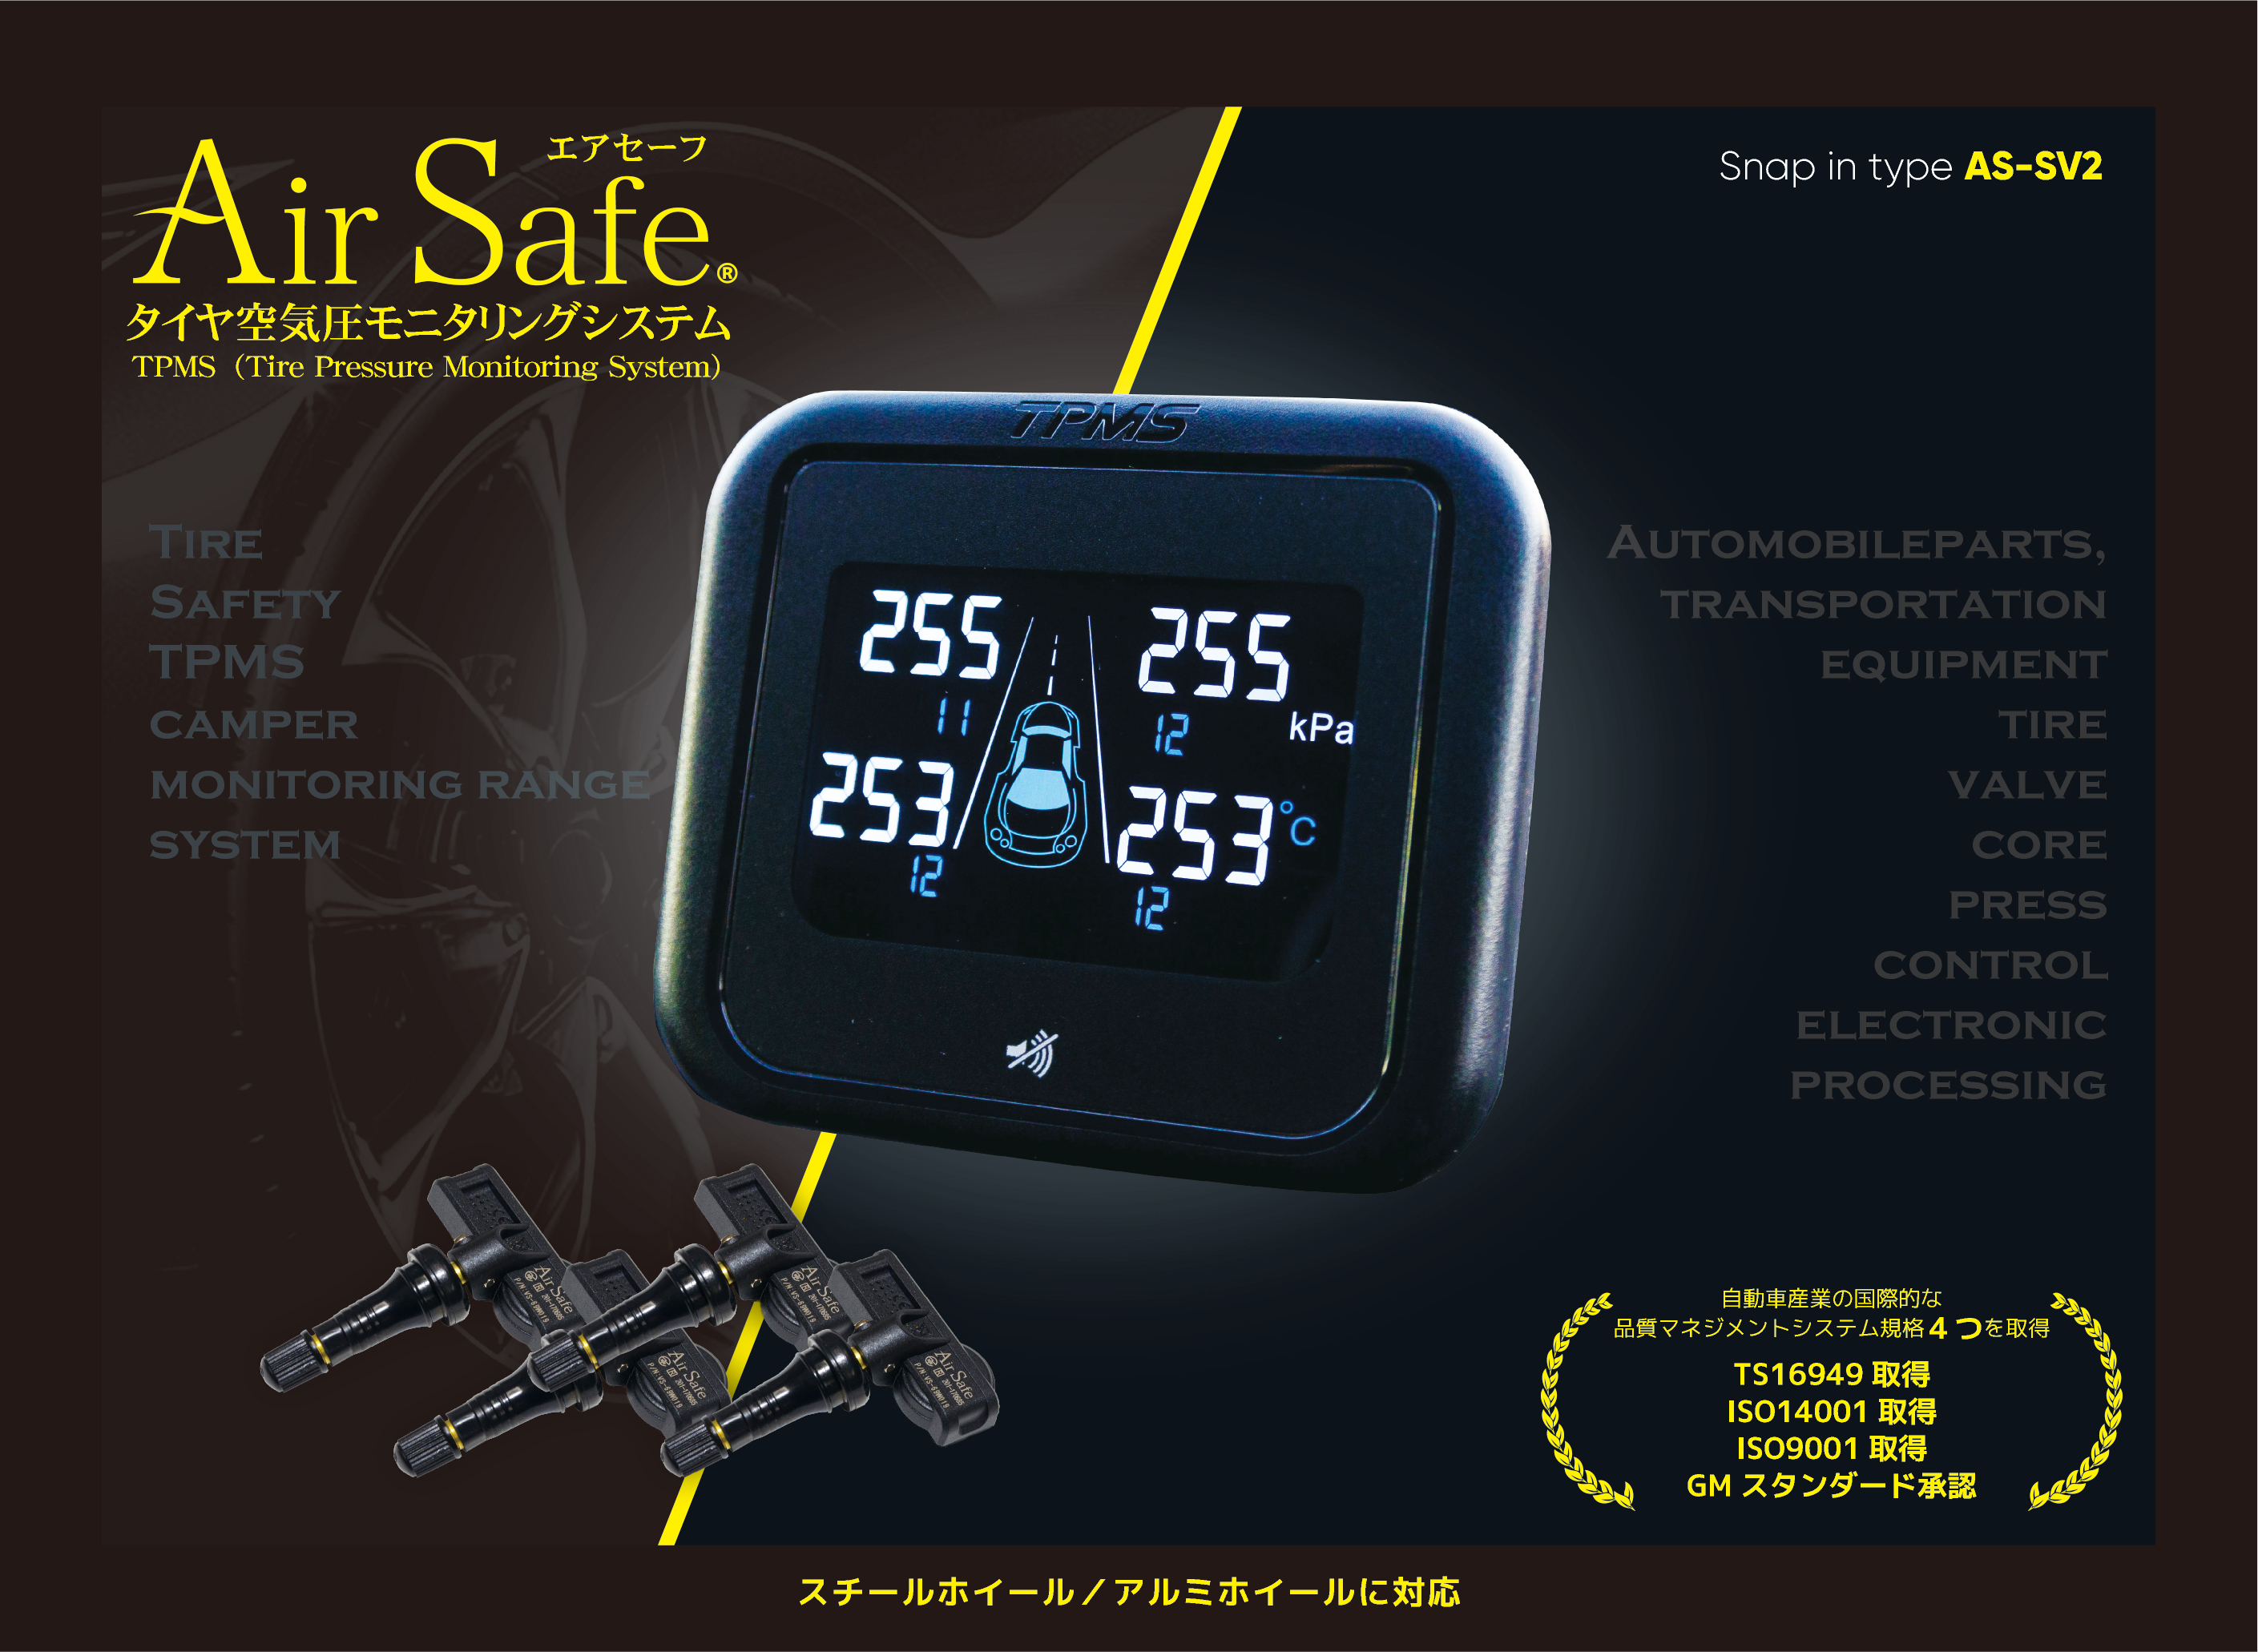 2023】 AS-SV2 Air Safe TPMS タイヤ空気圧モニタ ILsmz-m83395044092